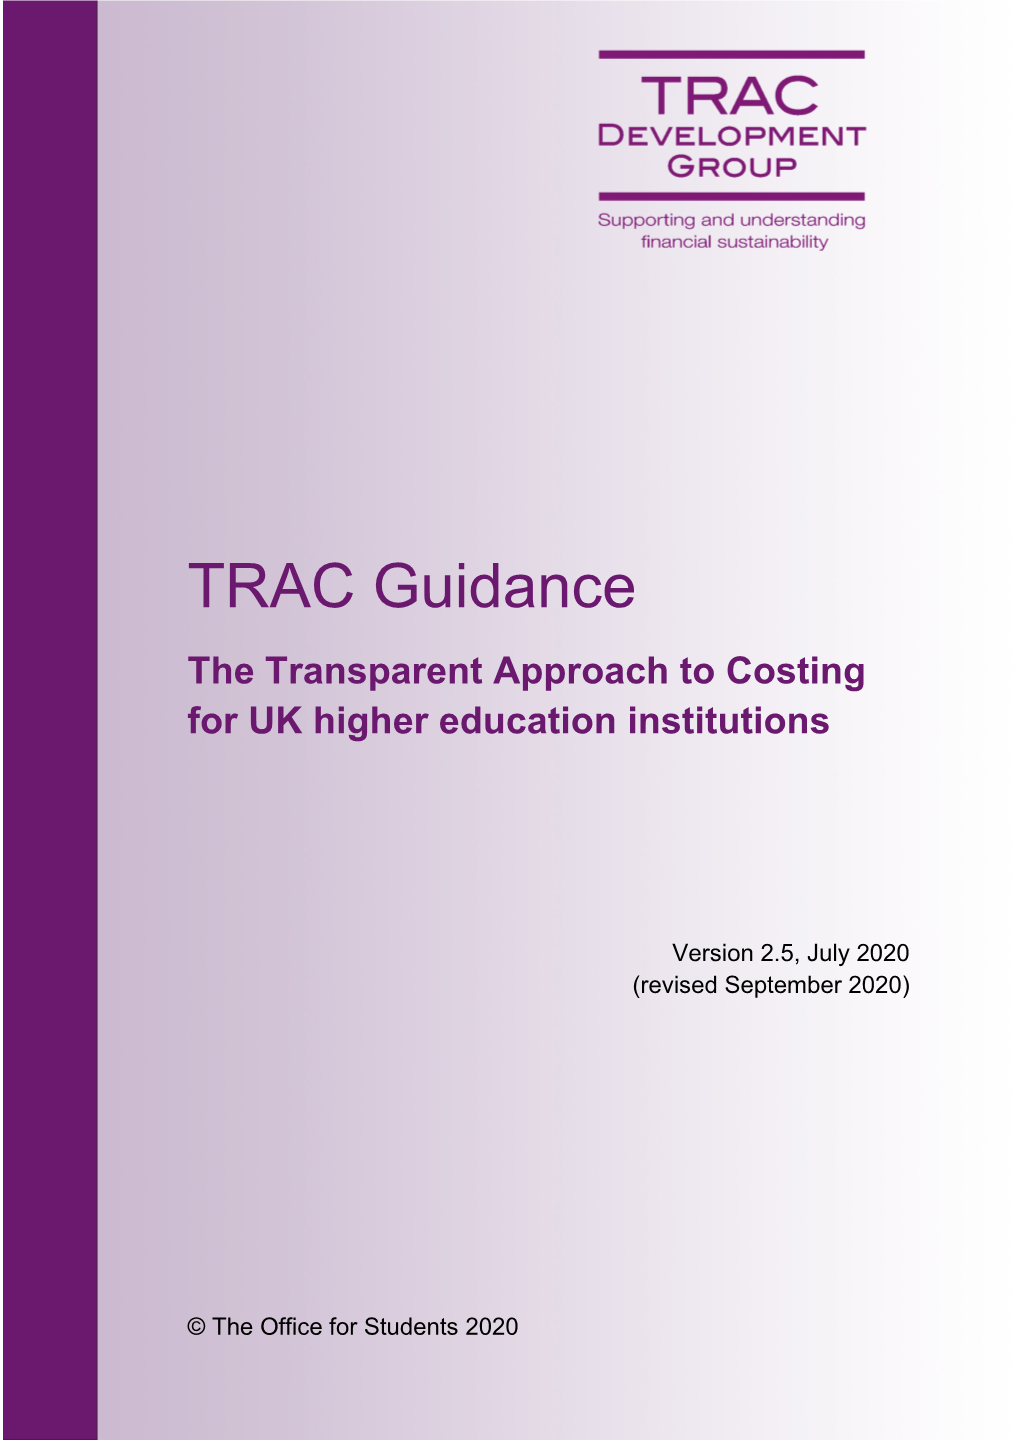 TRAC Guidance V2.5 July 2020